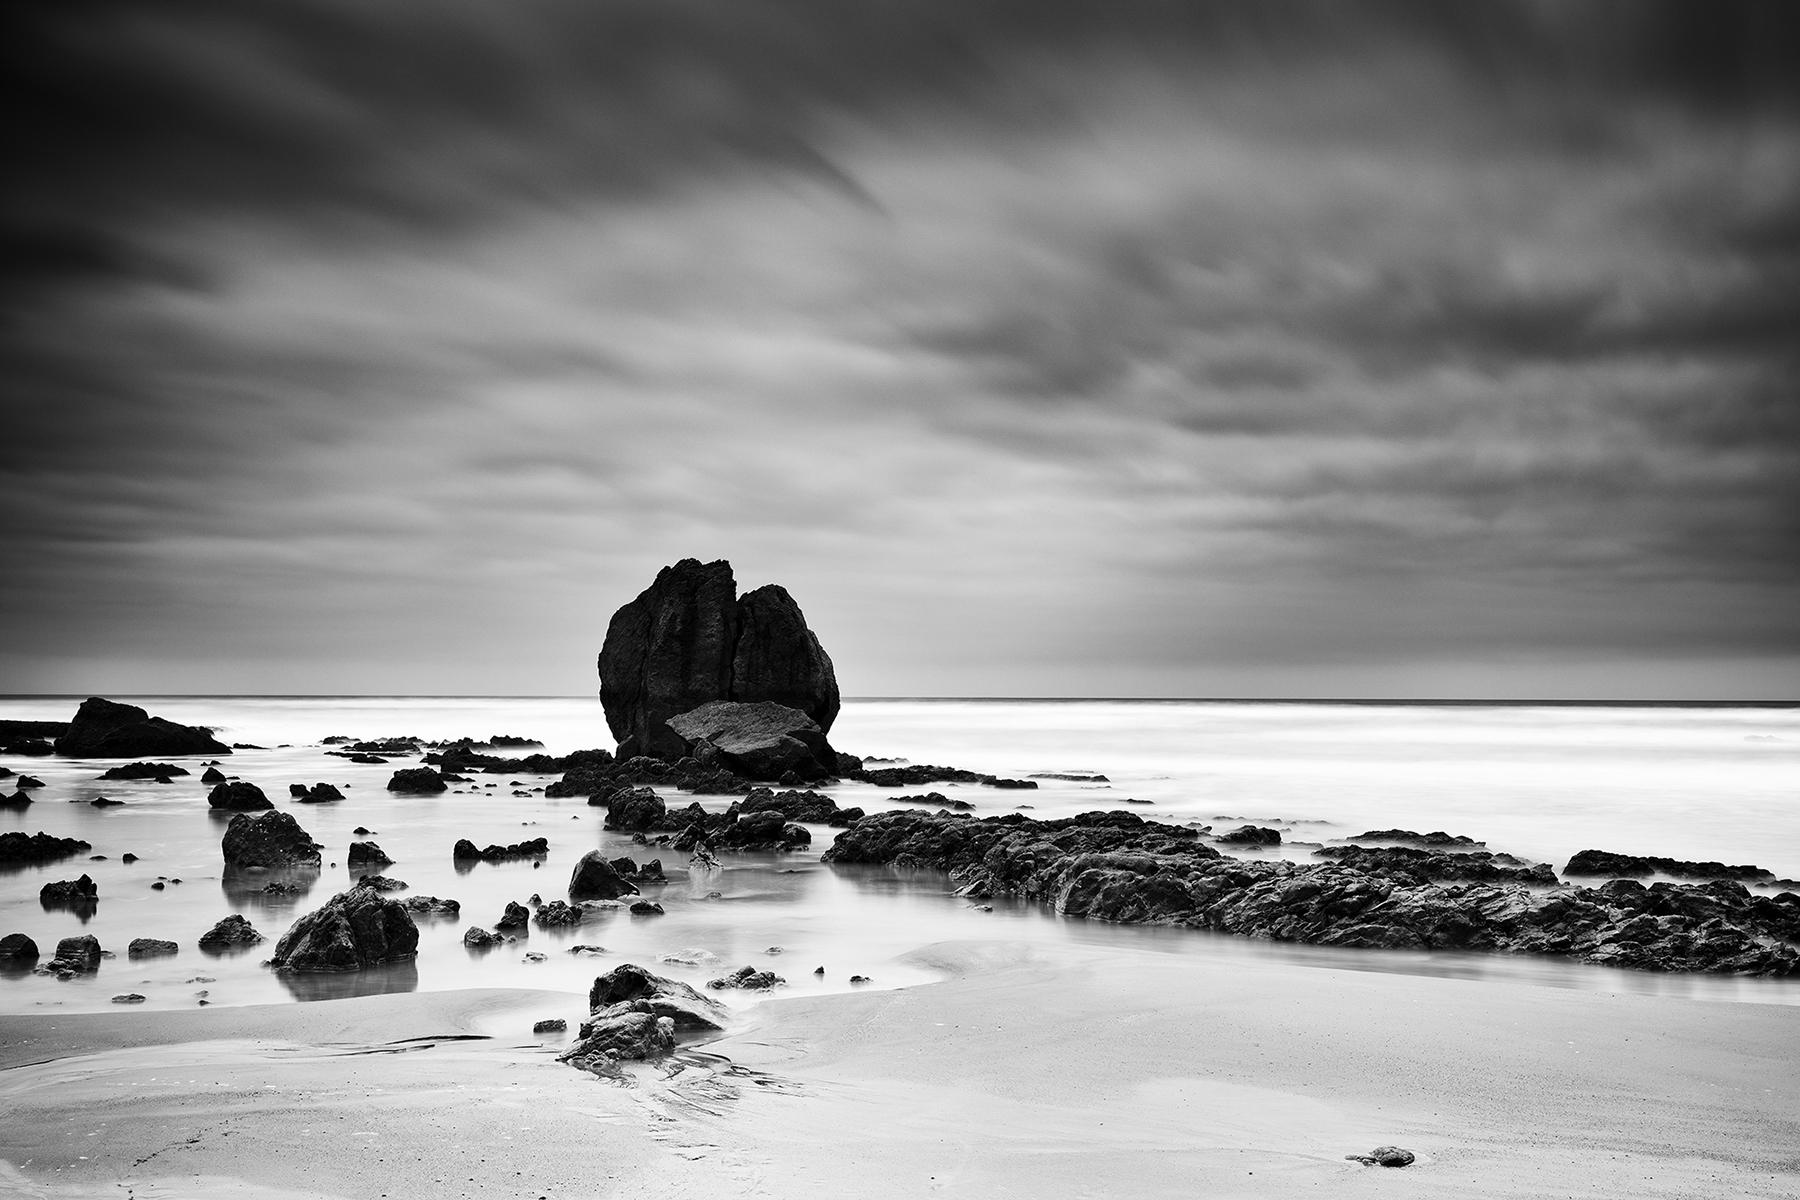 Gerald Berghammer Landscape Photograph - Rocks on the Shore, beach, Atlantic Coast, France, black and white landscape 